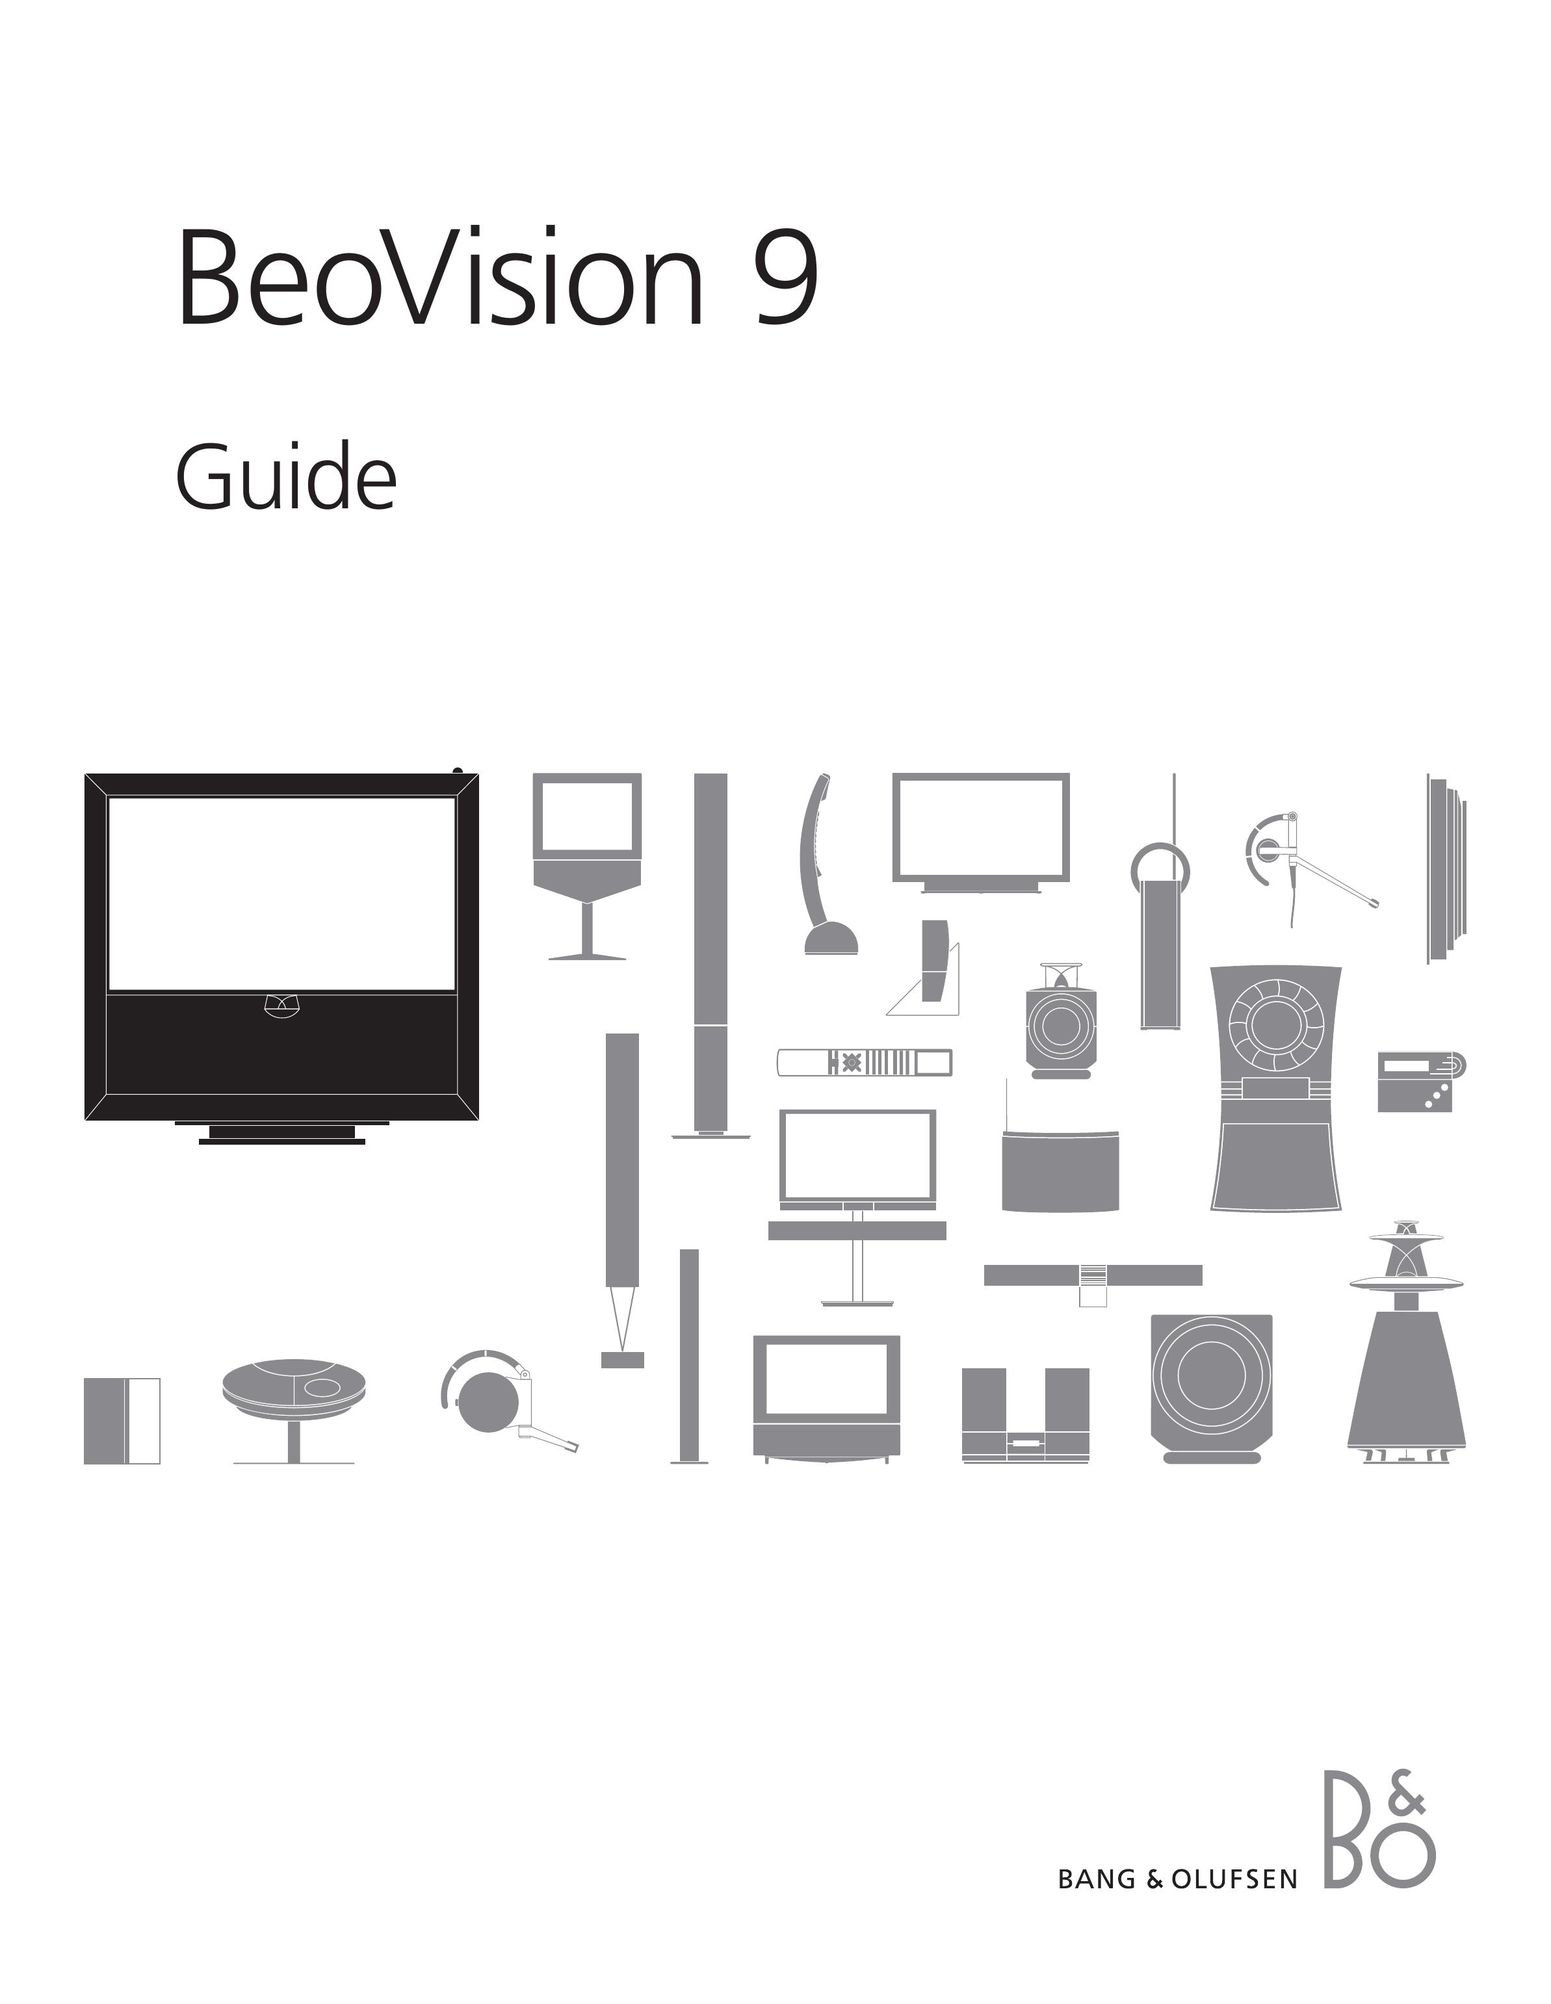 Bang & Olufsen BeoVision 9 Flat Panel Television User Manual